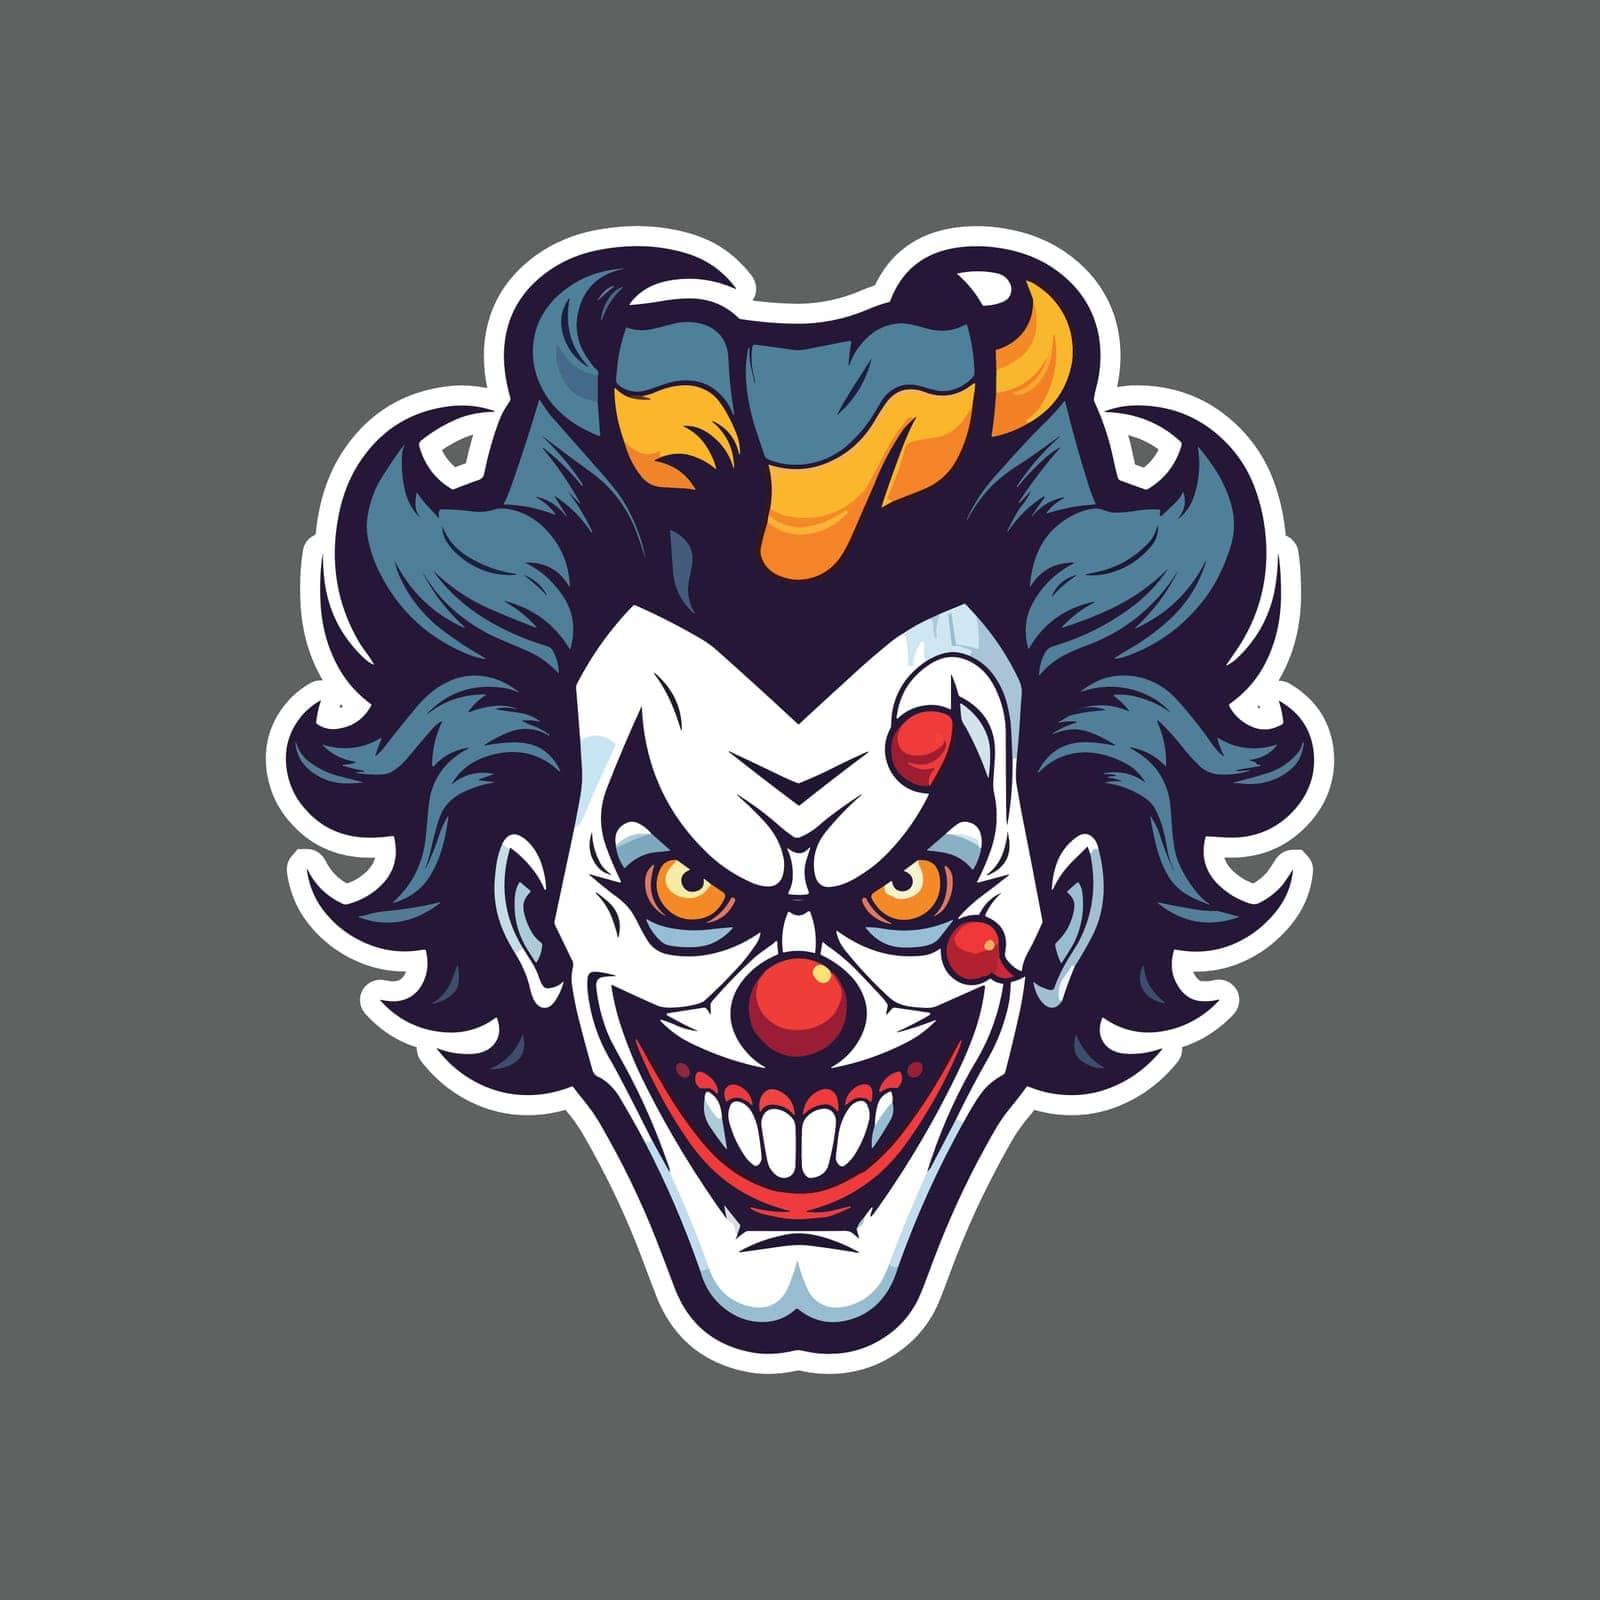 joker face sticker on grey background by Vinhsino